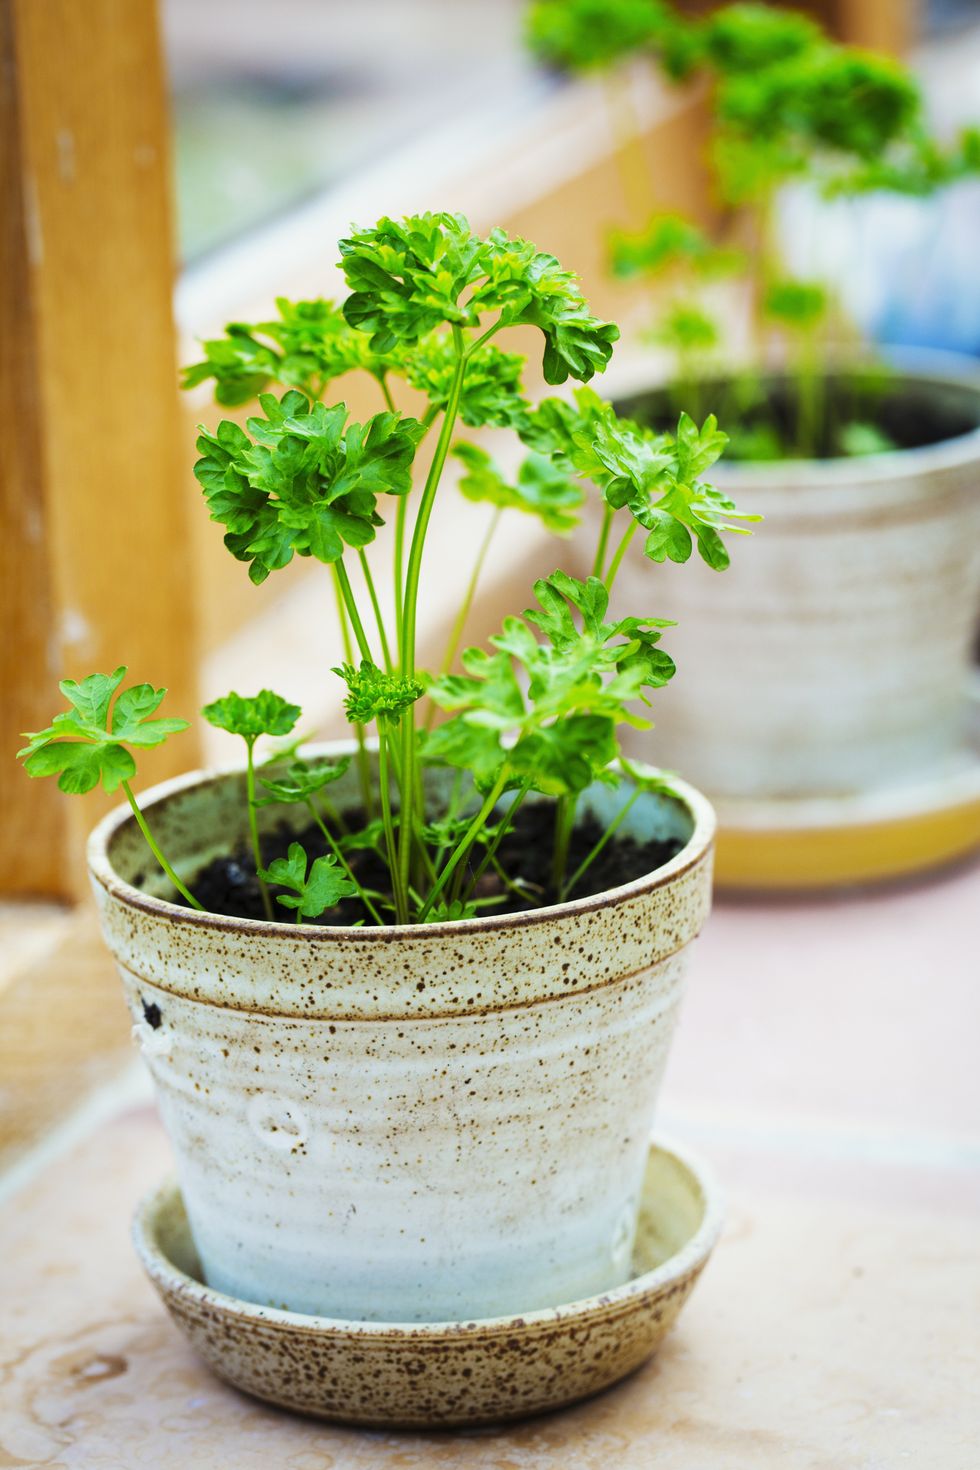 8 Kitchen Plants - Best Houseplants That Thrive in Kitchens